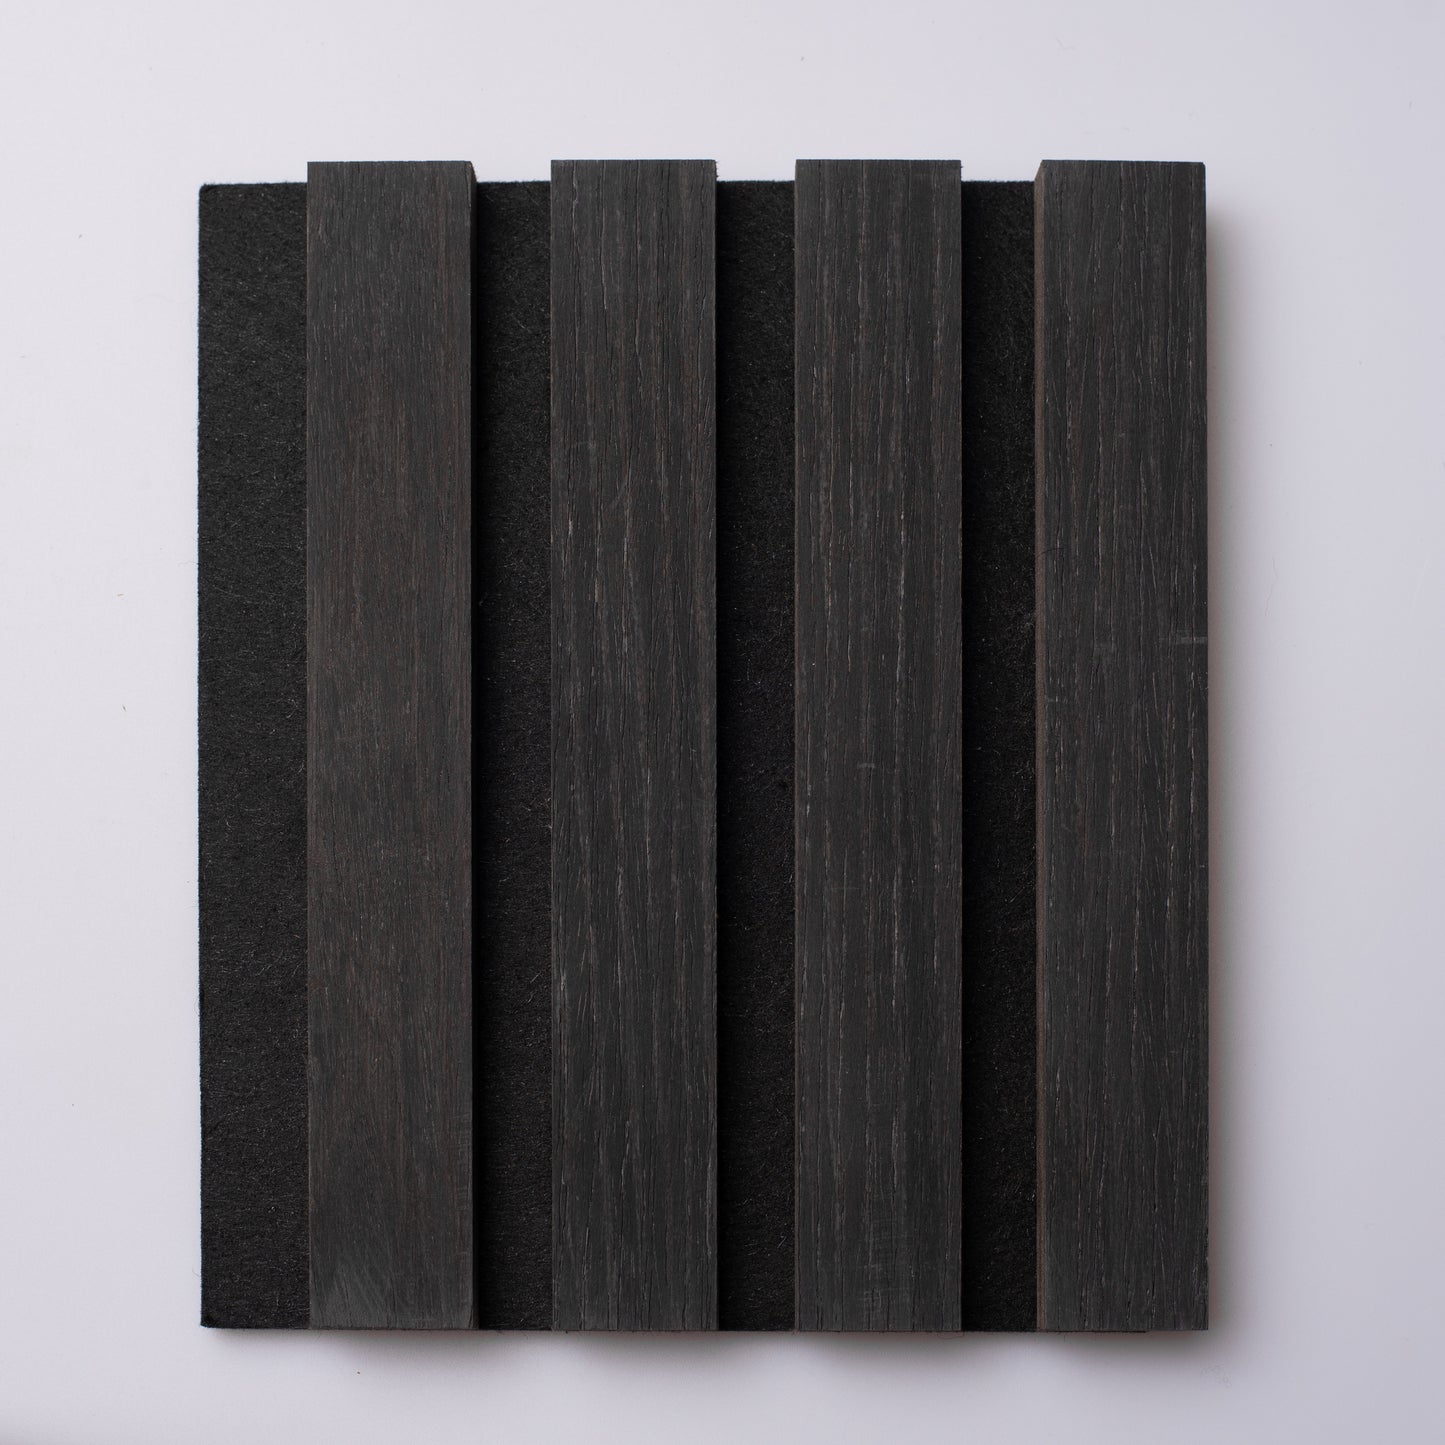 Sample size panel of NüBatten's Charcoal Oak Wood Slat Panel